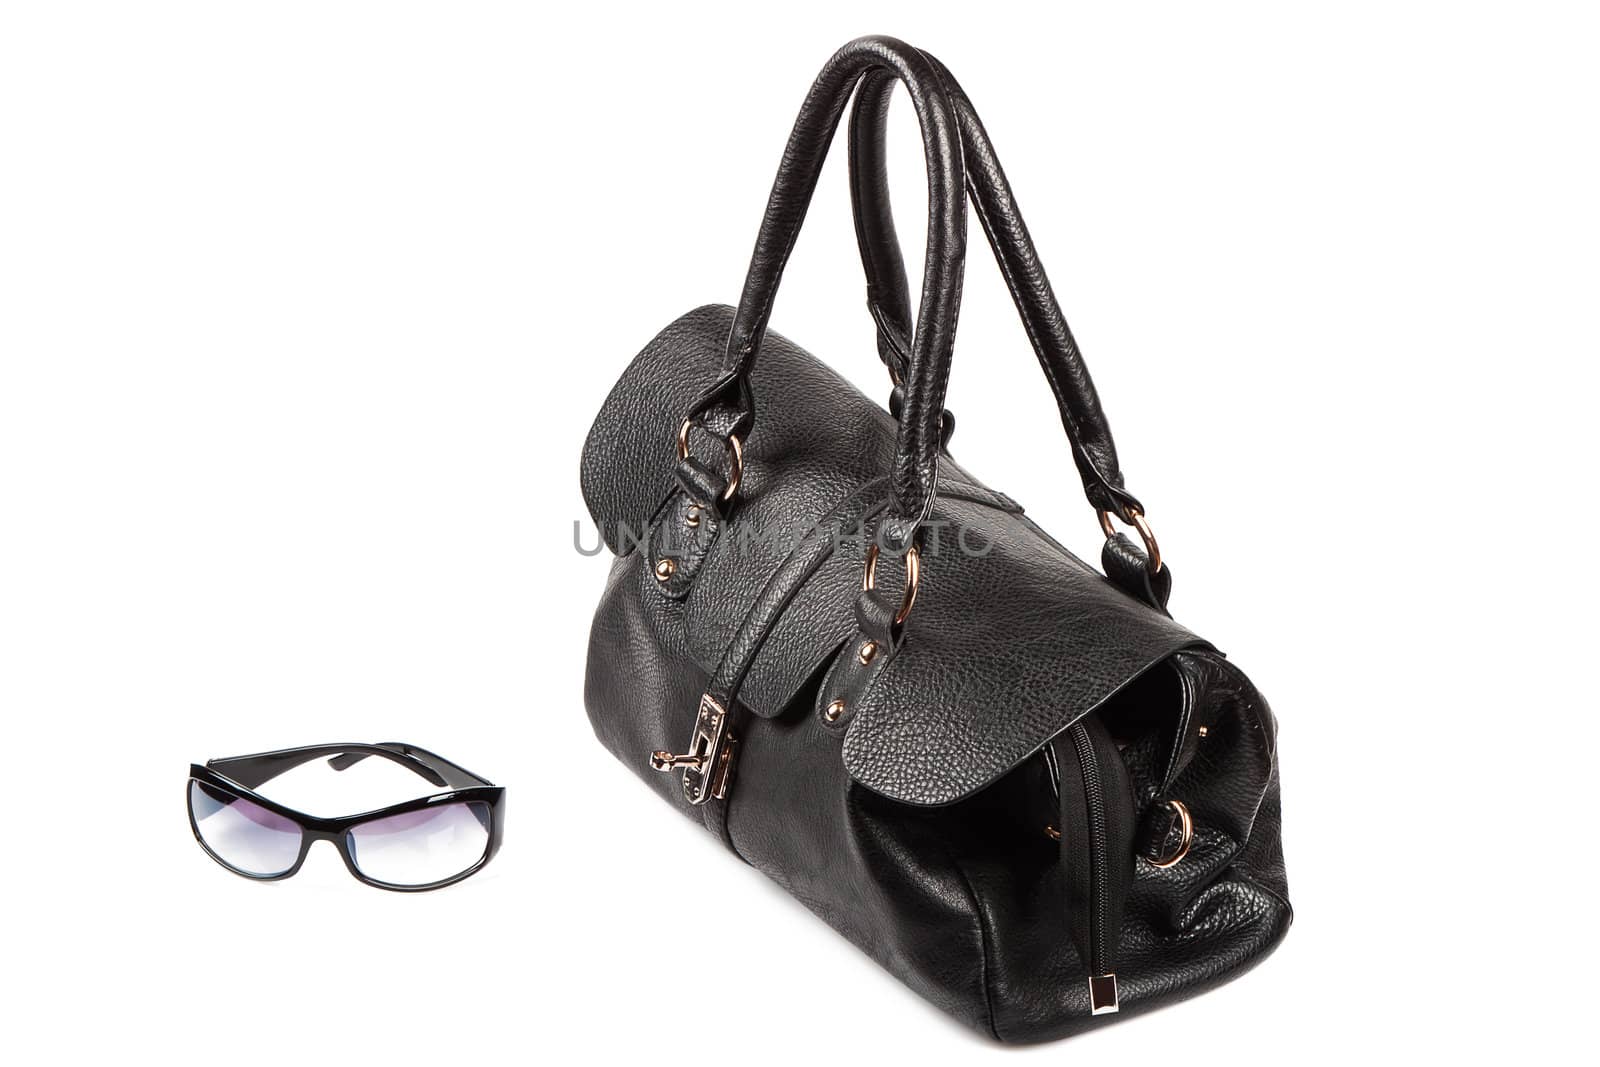 Black handbag and glasses isolated on the white background